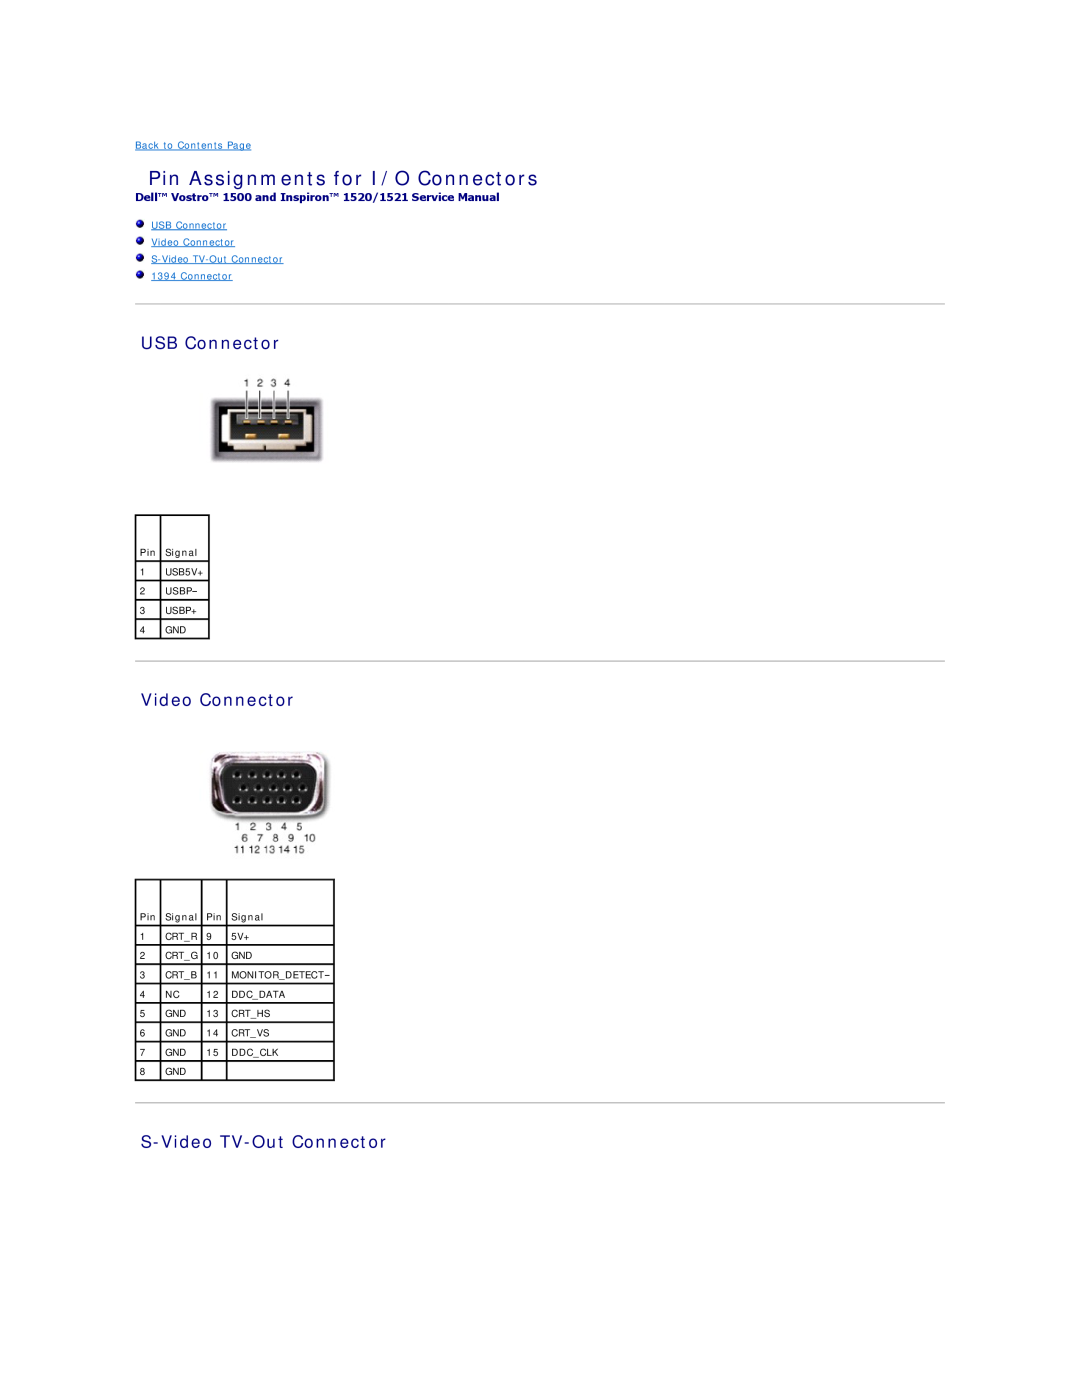 Dell 1521, 1500 Pin Assignments for I/O Connectors, USB Connector, Video Connector, S-Video TV-Out Connector, Pin Signal 